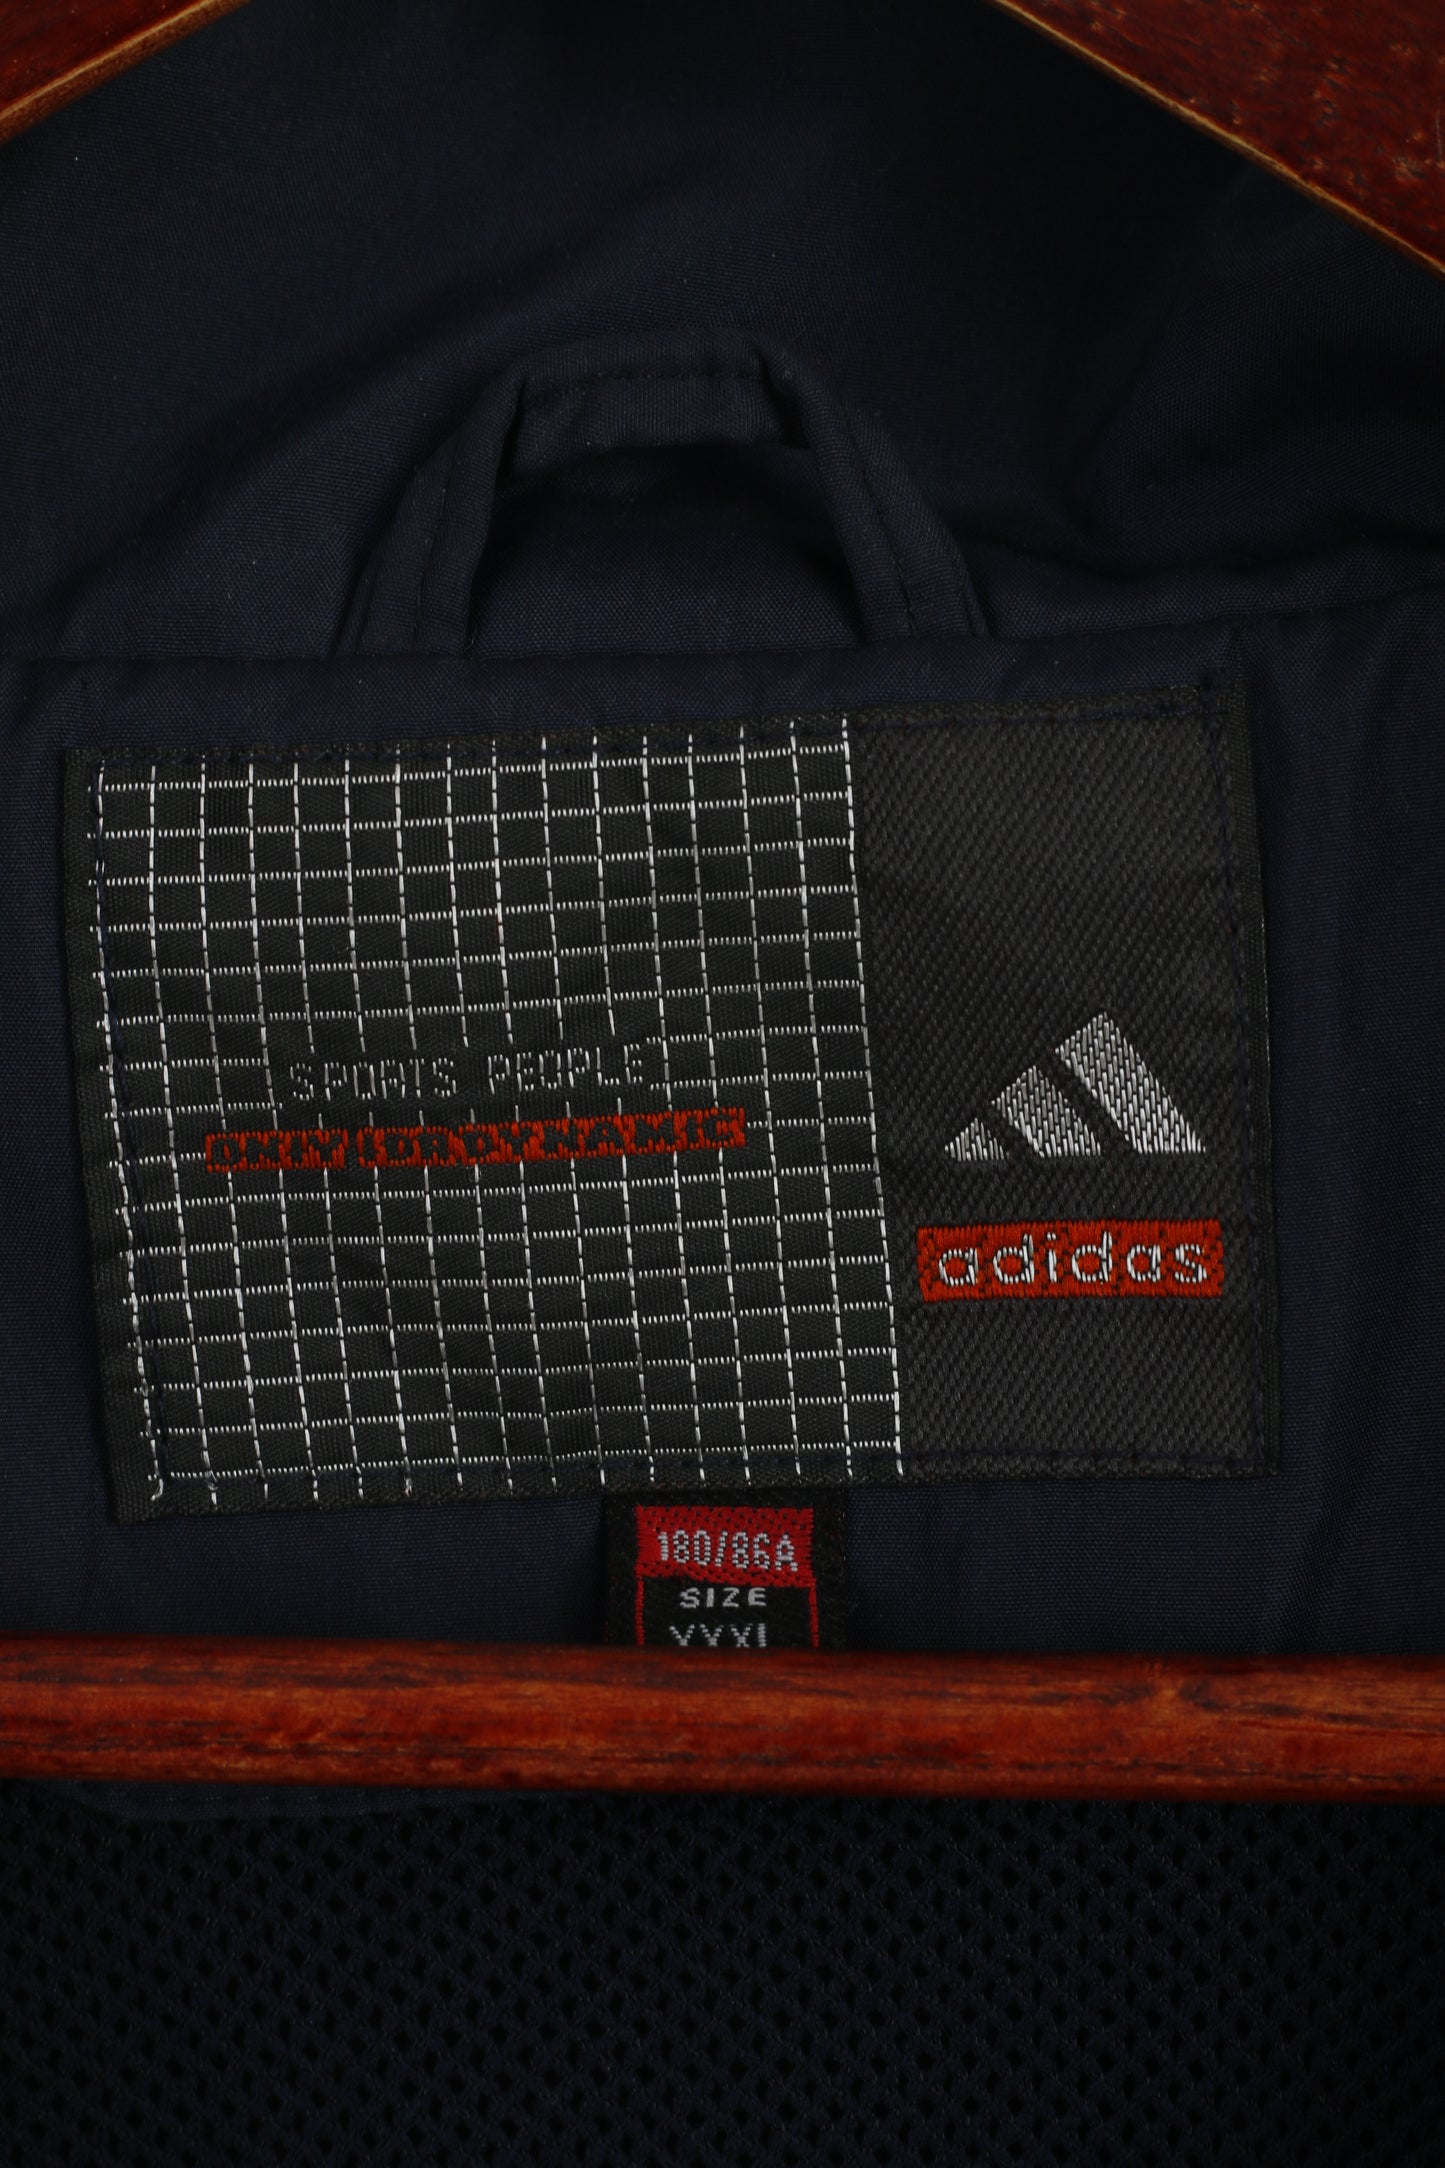 Adidas Men XXXL (XL) Jacket Navy north Down Football Mesh Lined Light Top